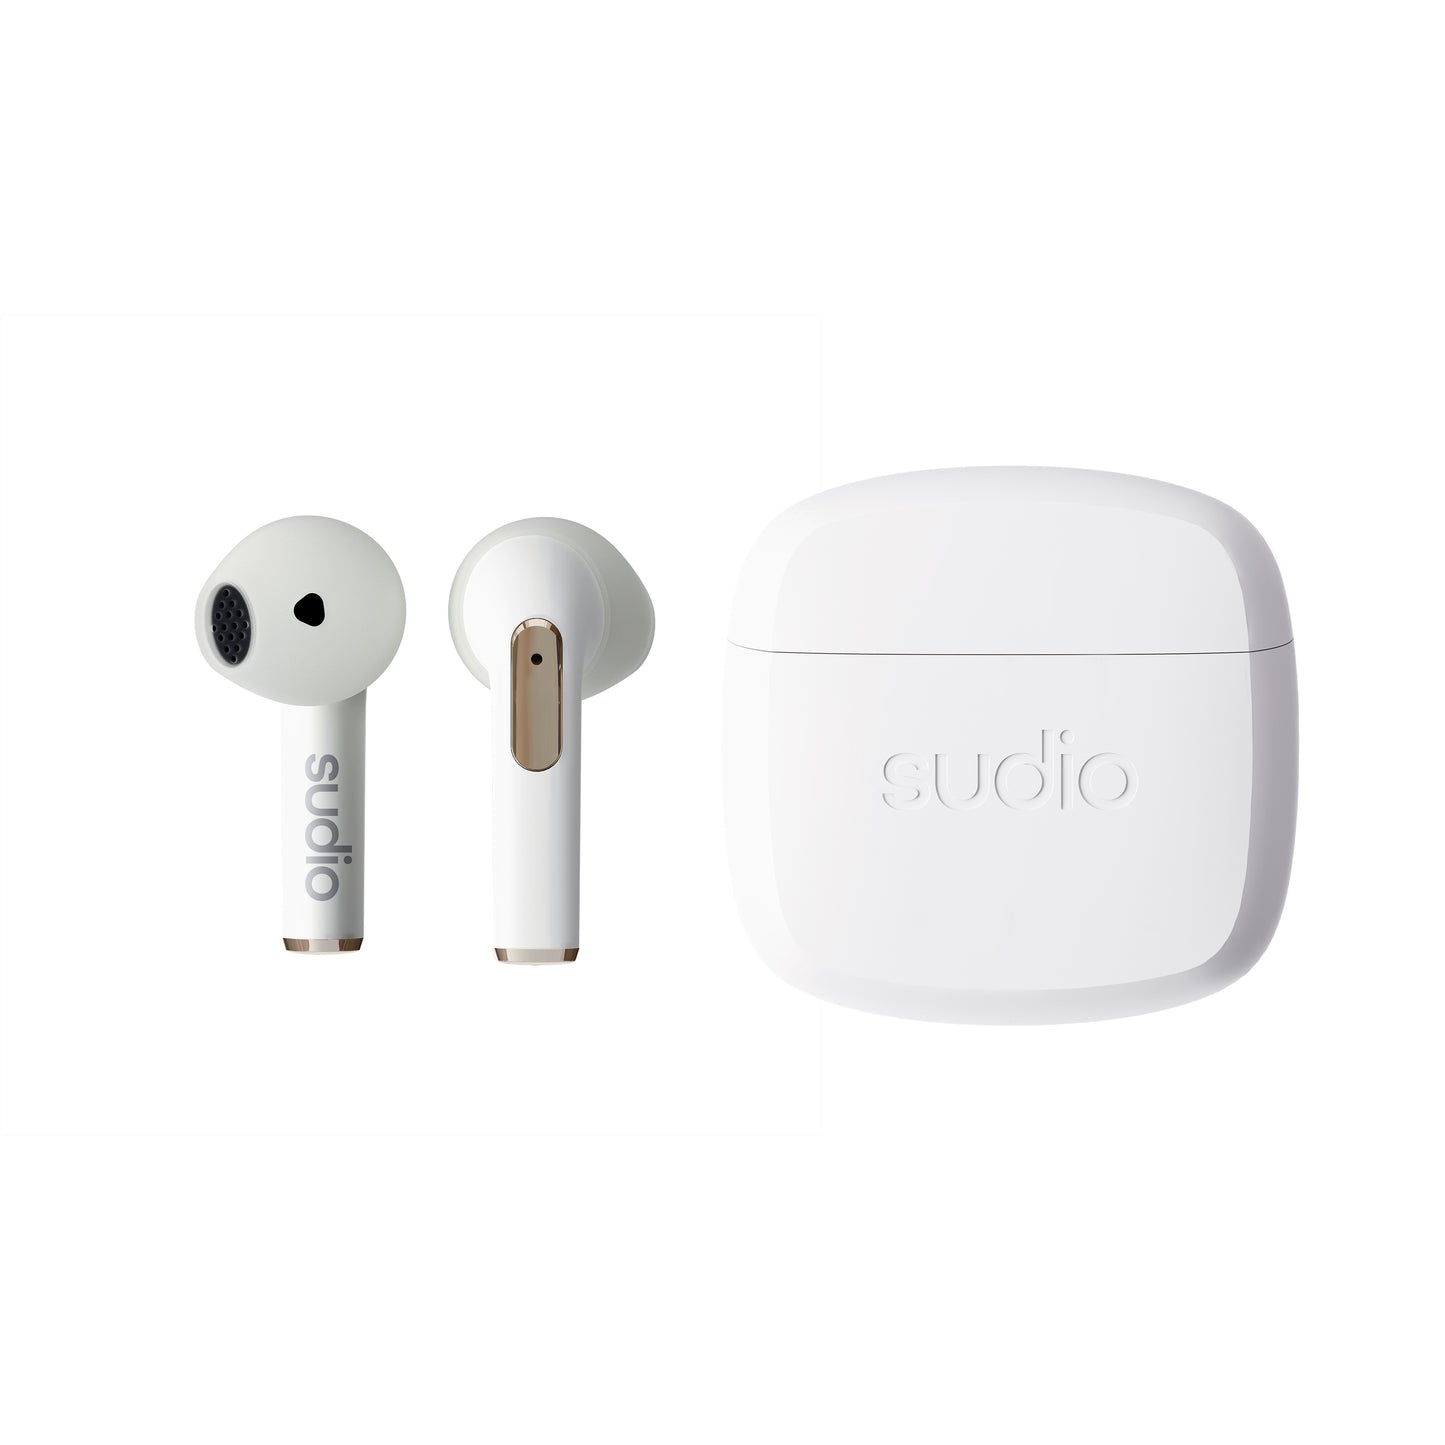 Sudio N2 半入耳真無線耳機 - 5色